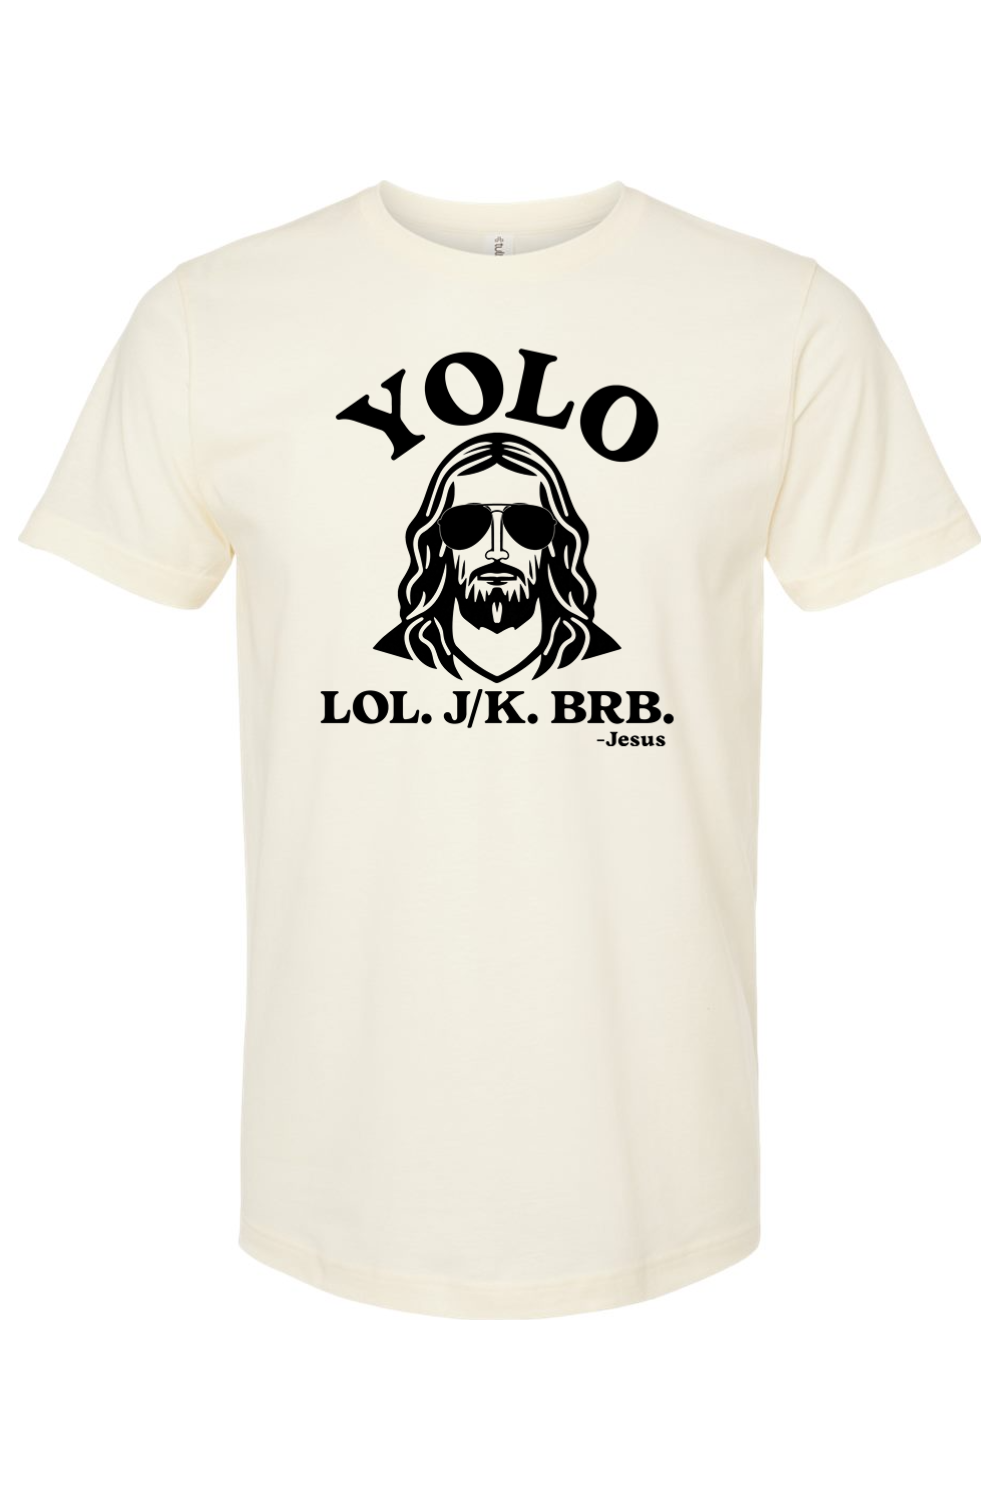 YOLO. LOL. J/K. BRB. - T-Shirt